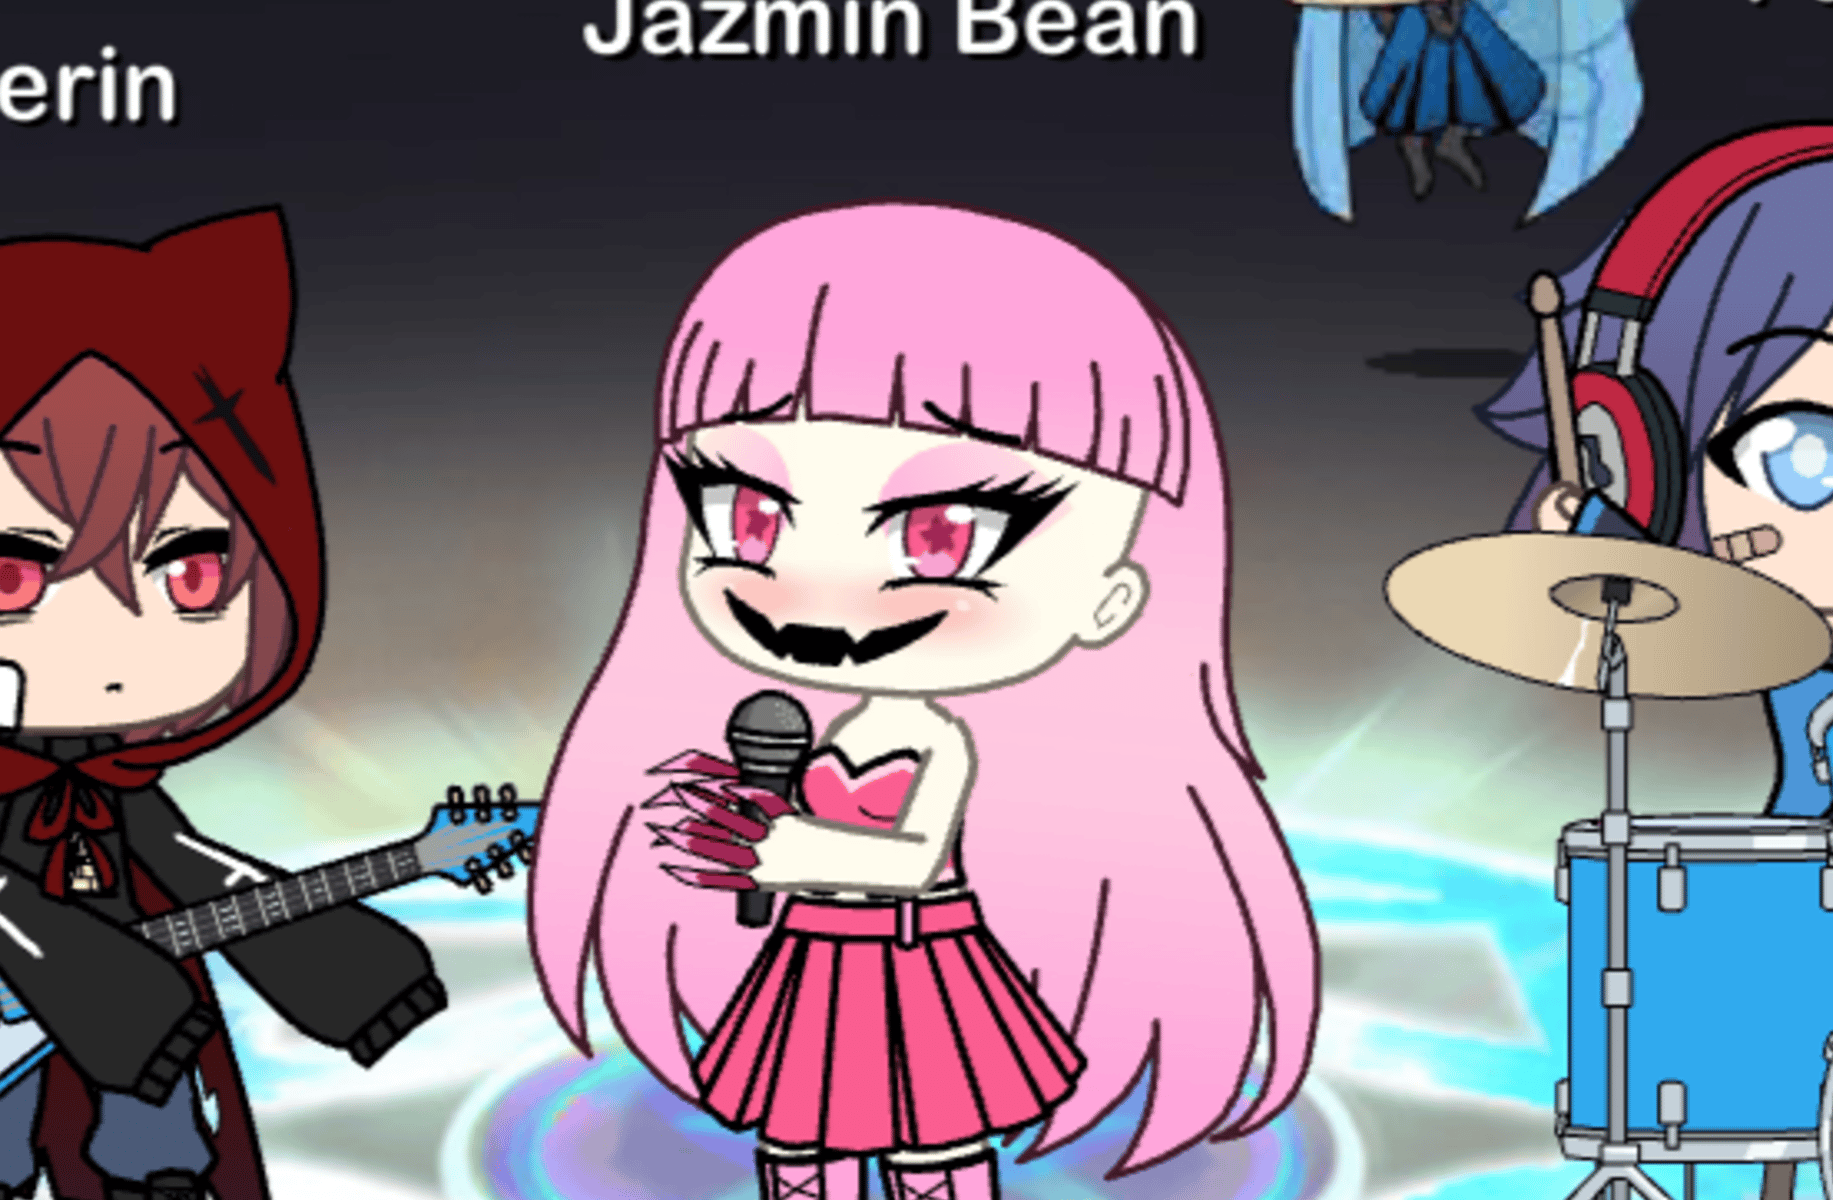 Jazmin Bean